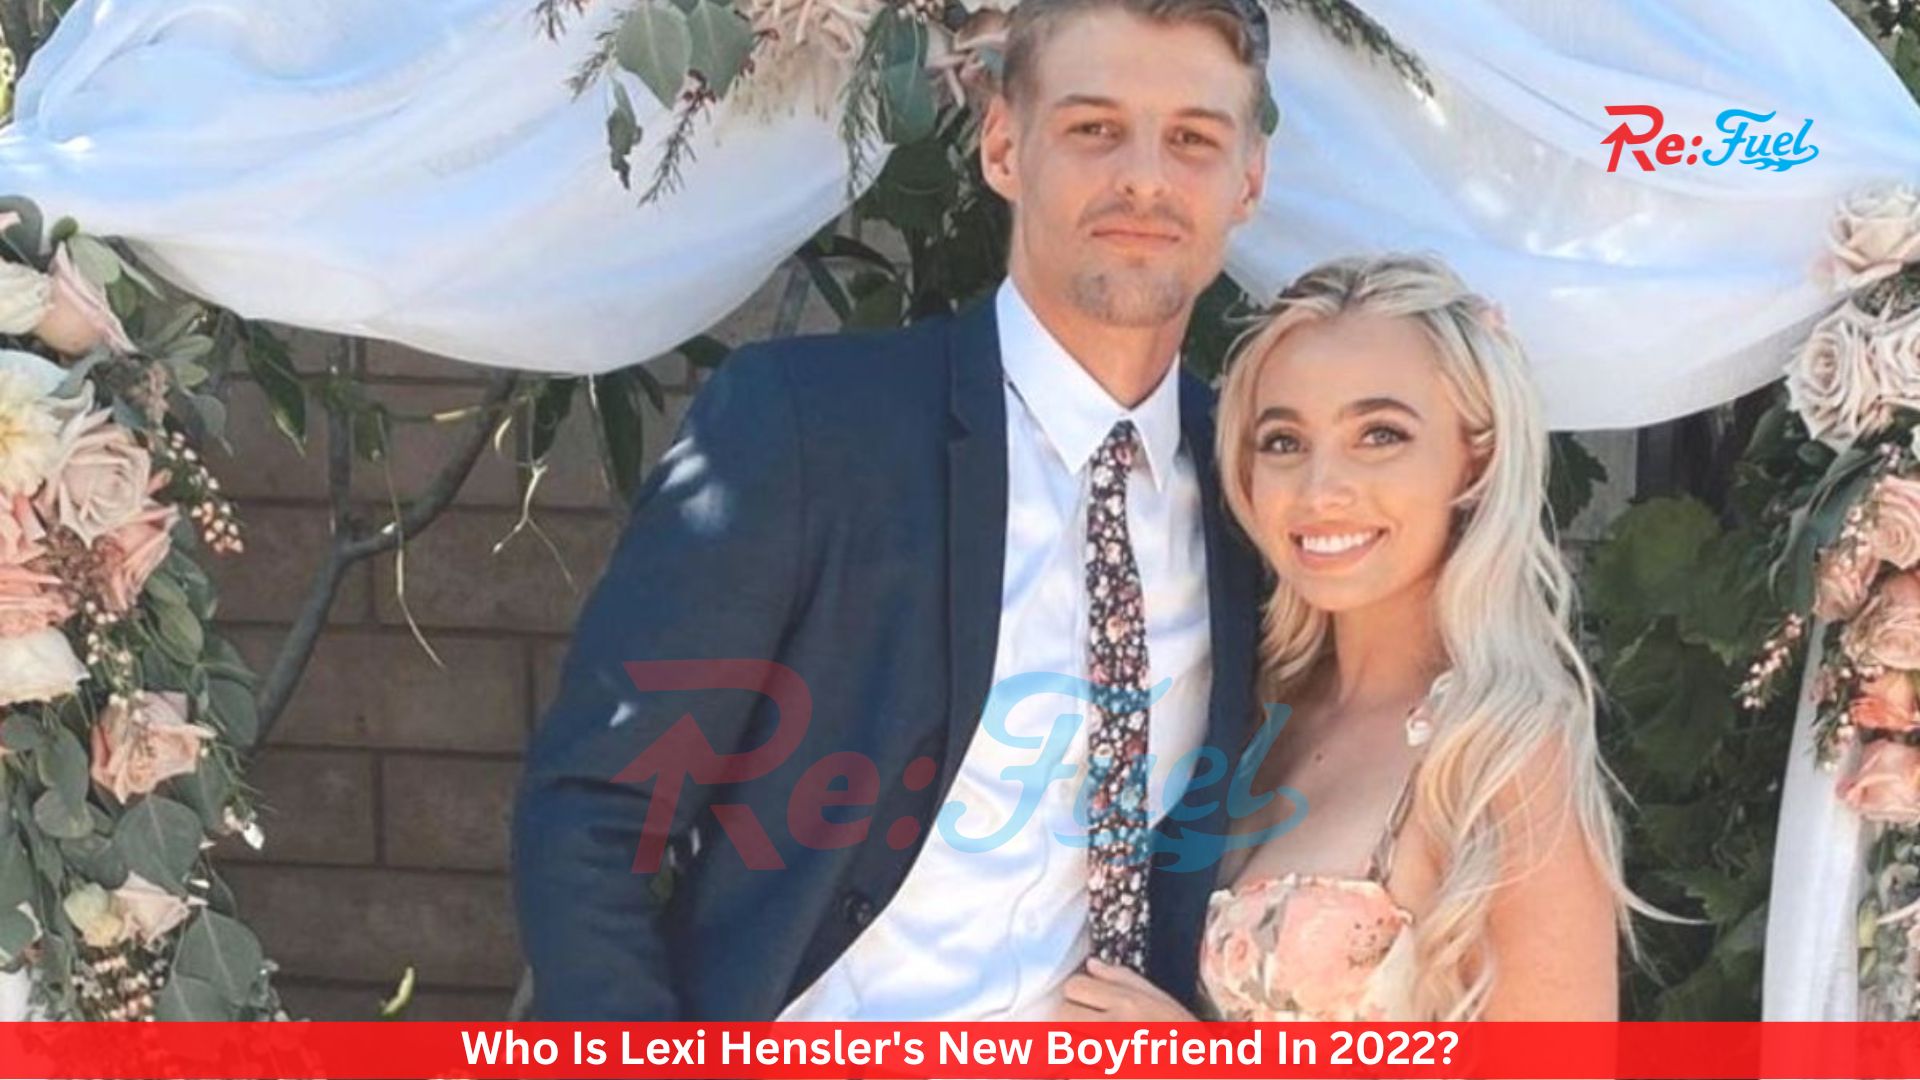 Who Is Lexi Hensler's New Boyfriend In 2022?